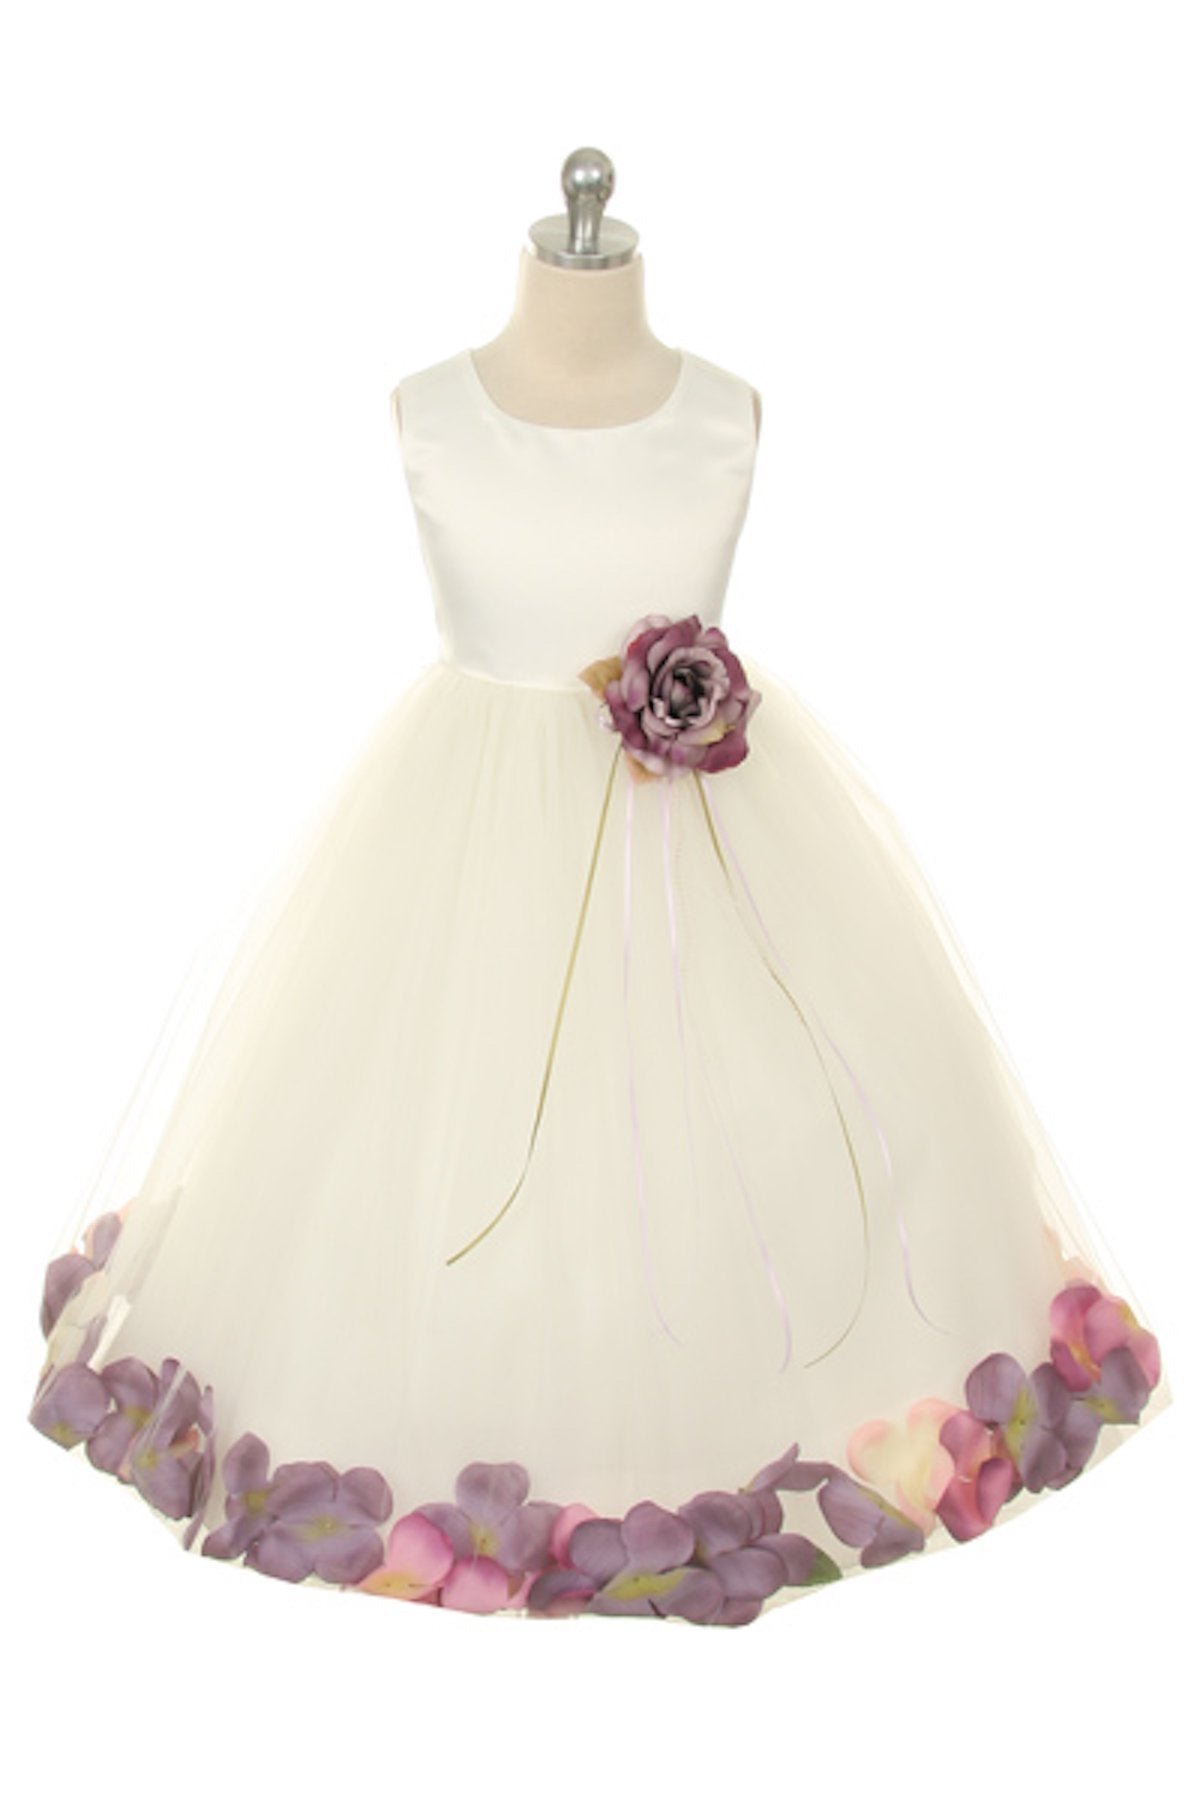 Dress - Satin Flower Petal Girl Dress (Ivory Dress)